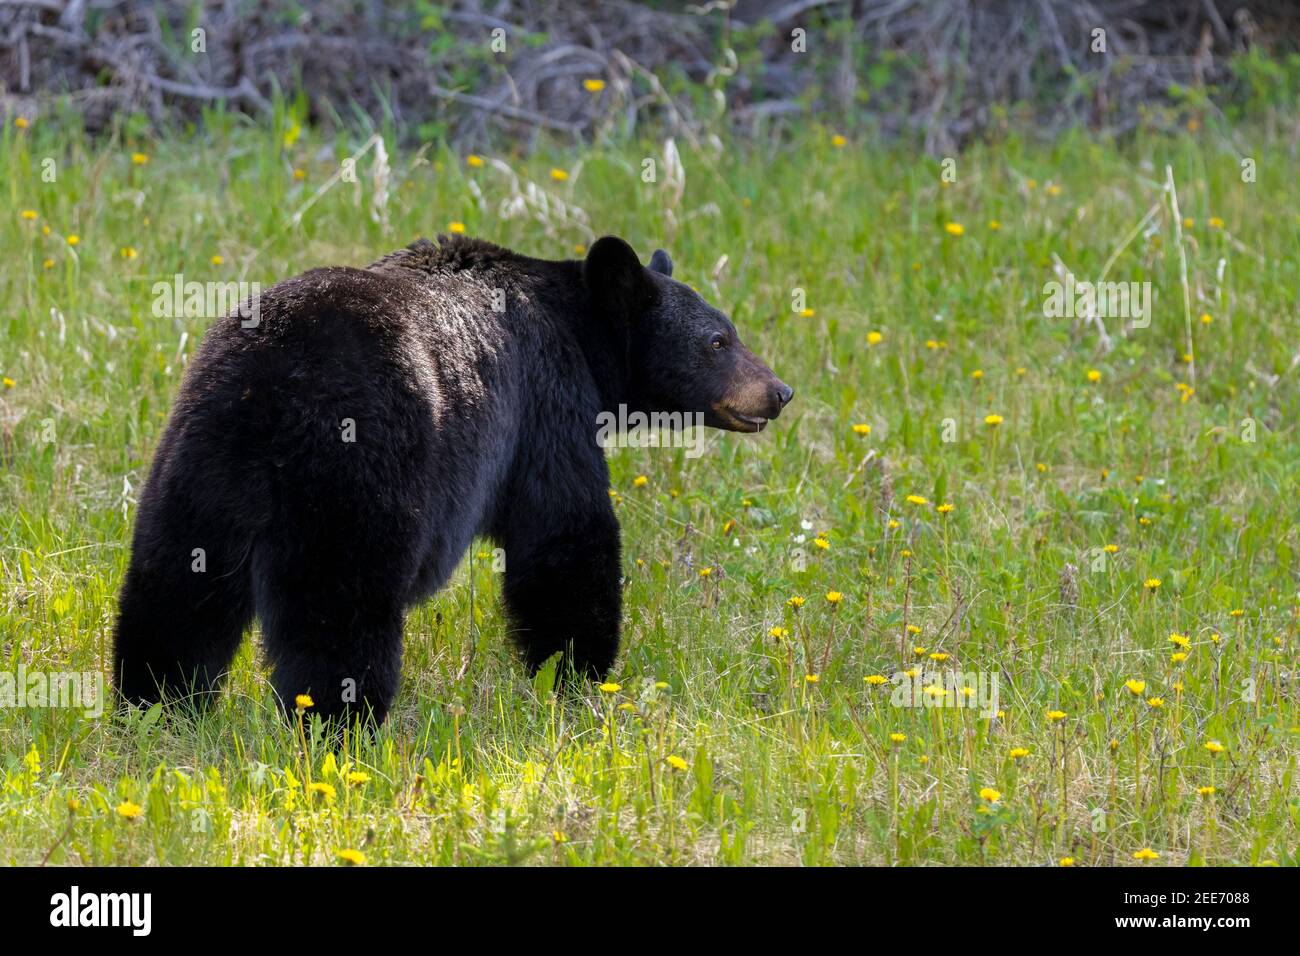 A Black Bear (Ursus Americanus) eating dandelions during summer in the Canadian Rockies Stock Photo